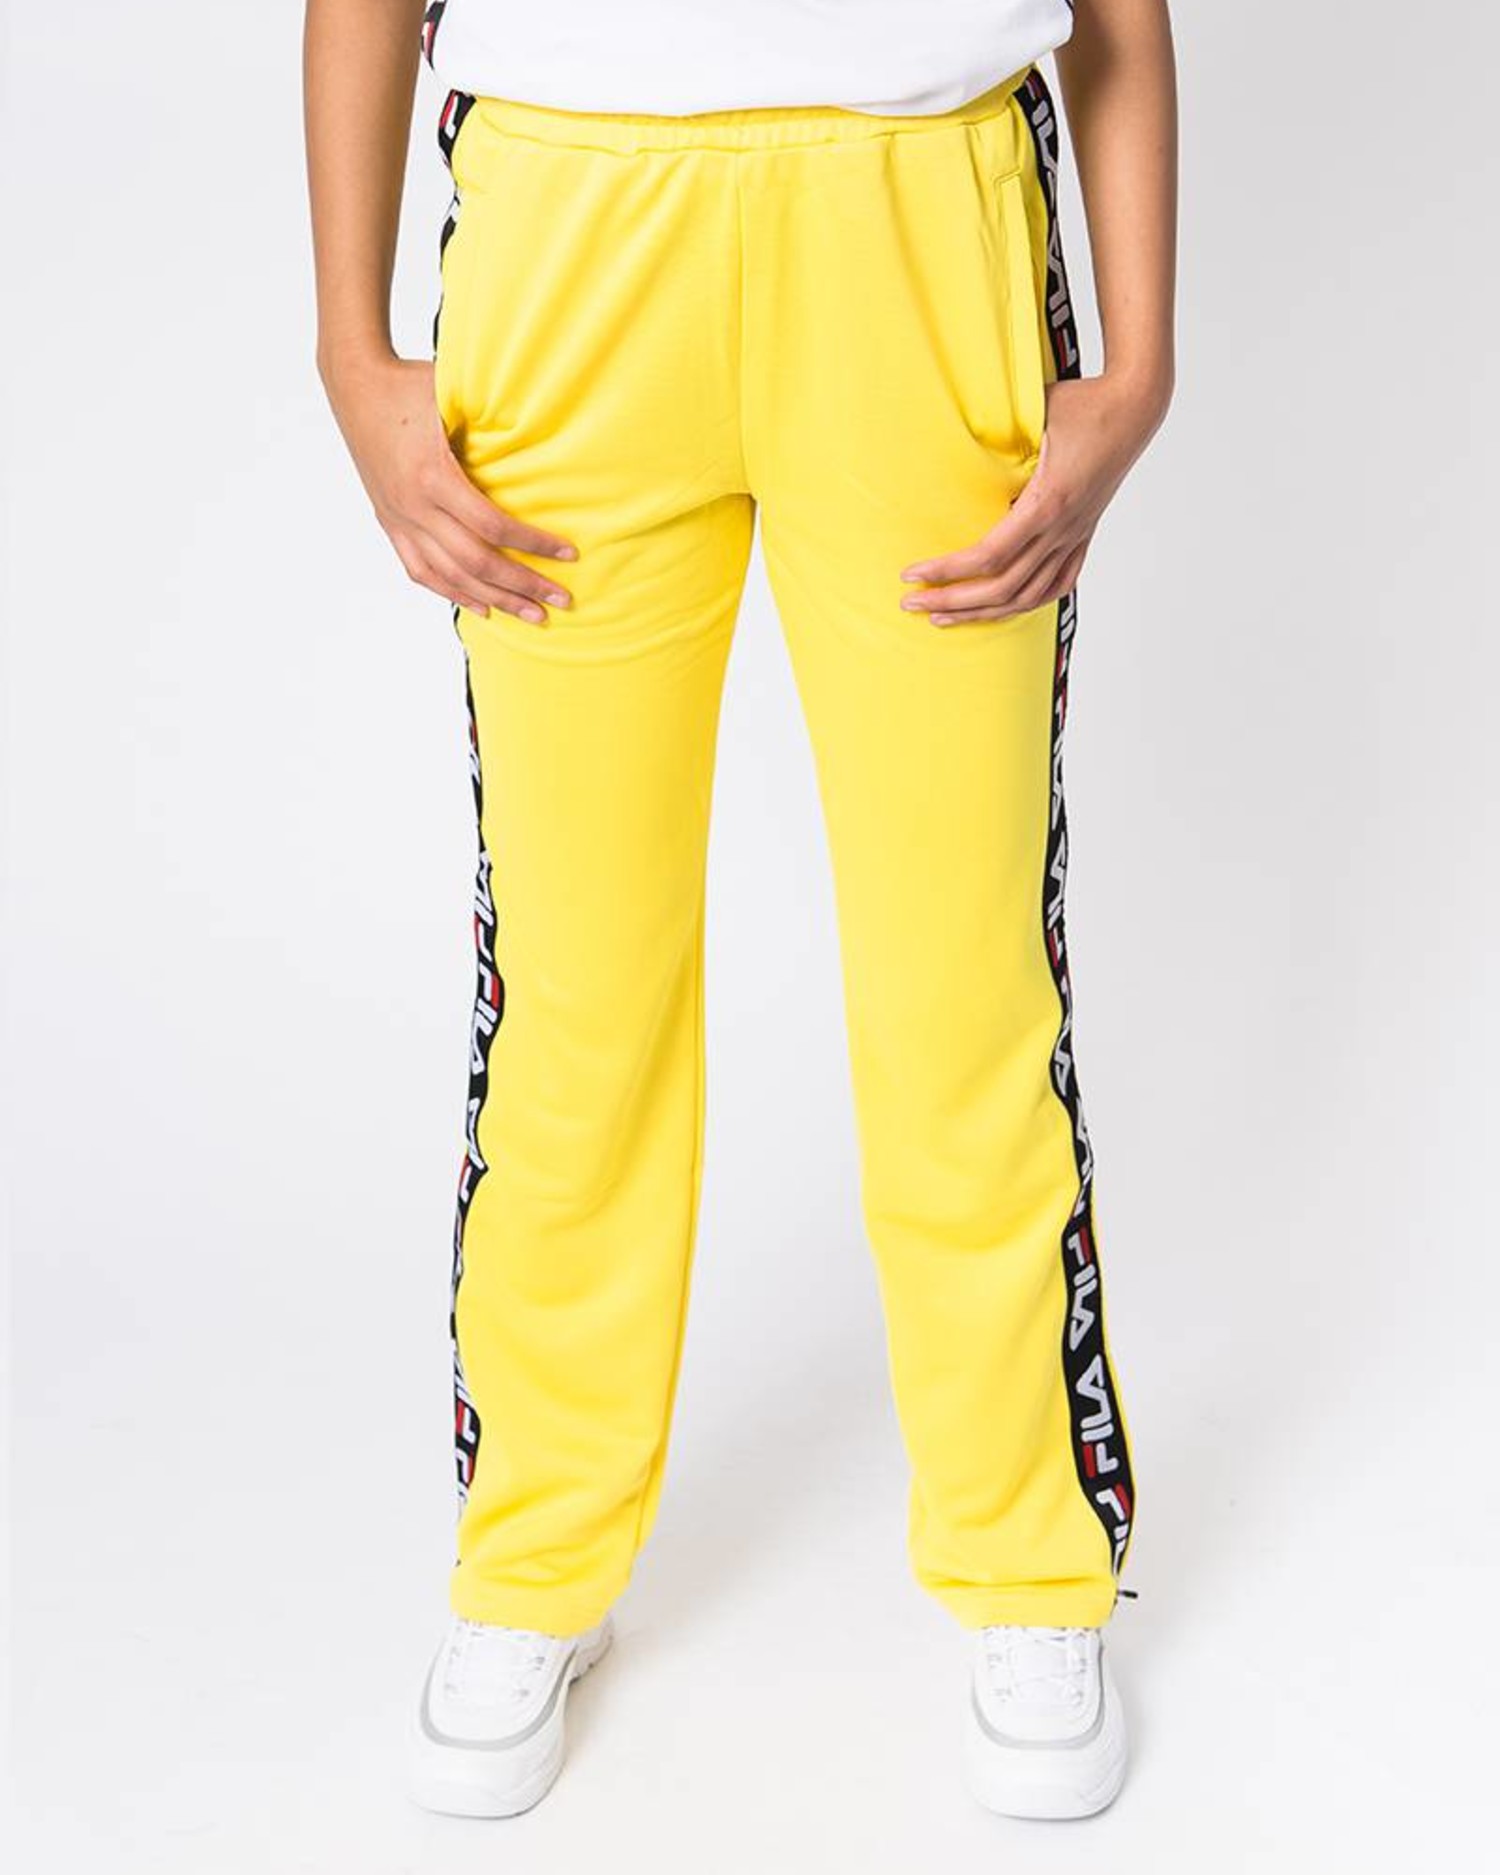 yellow fila pants